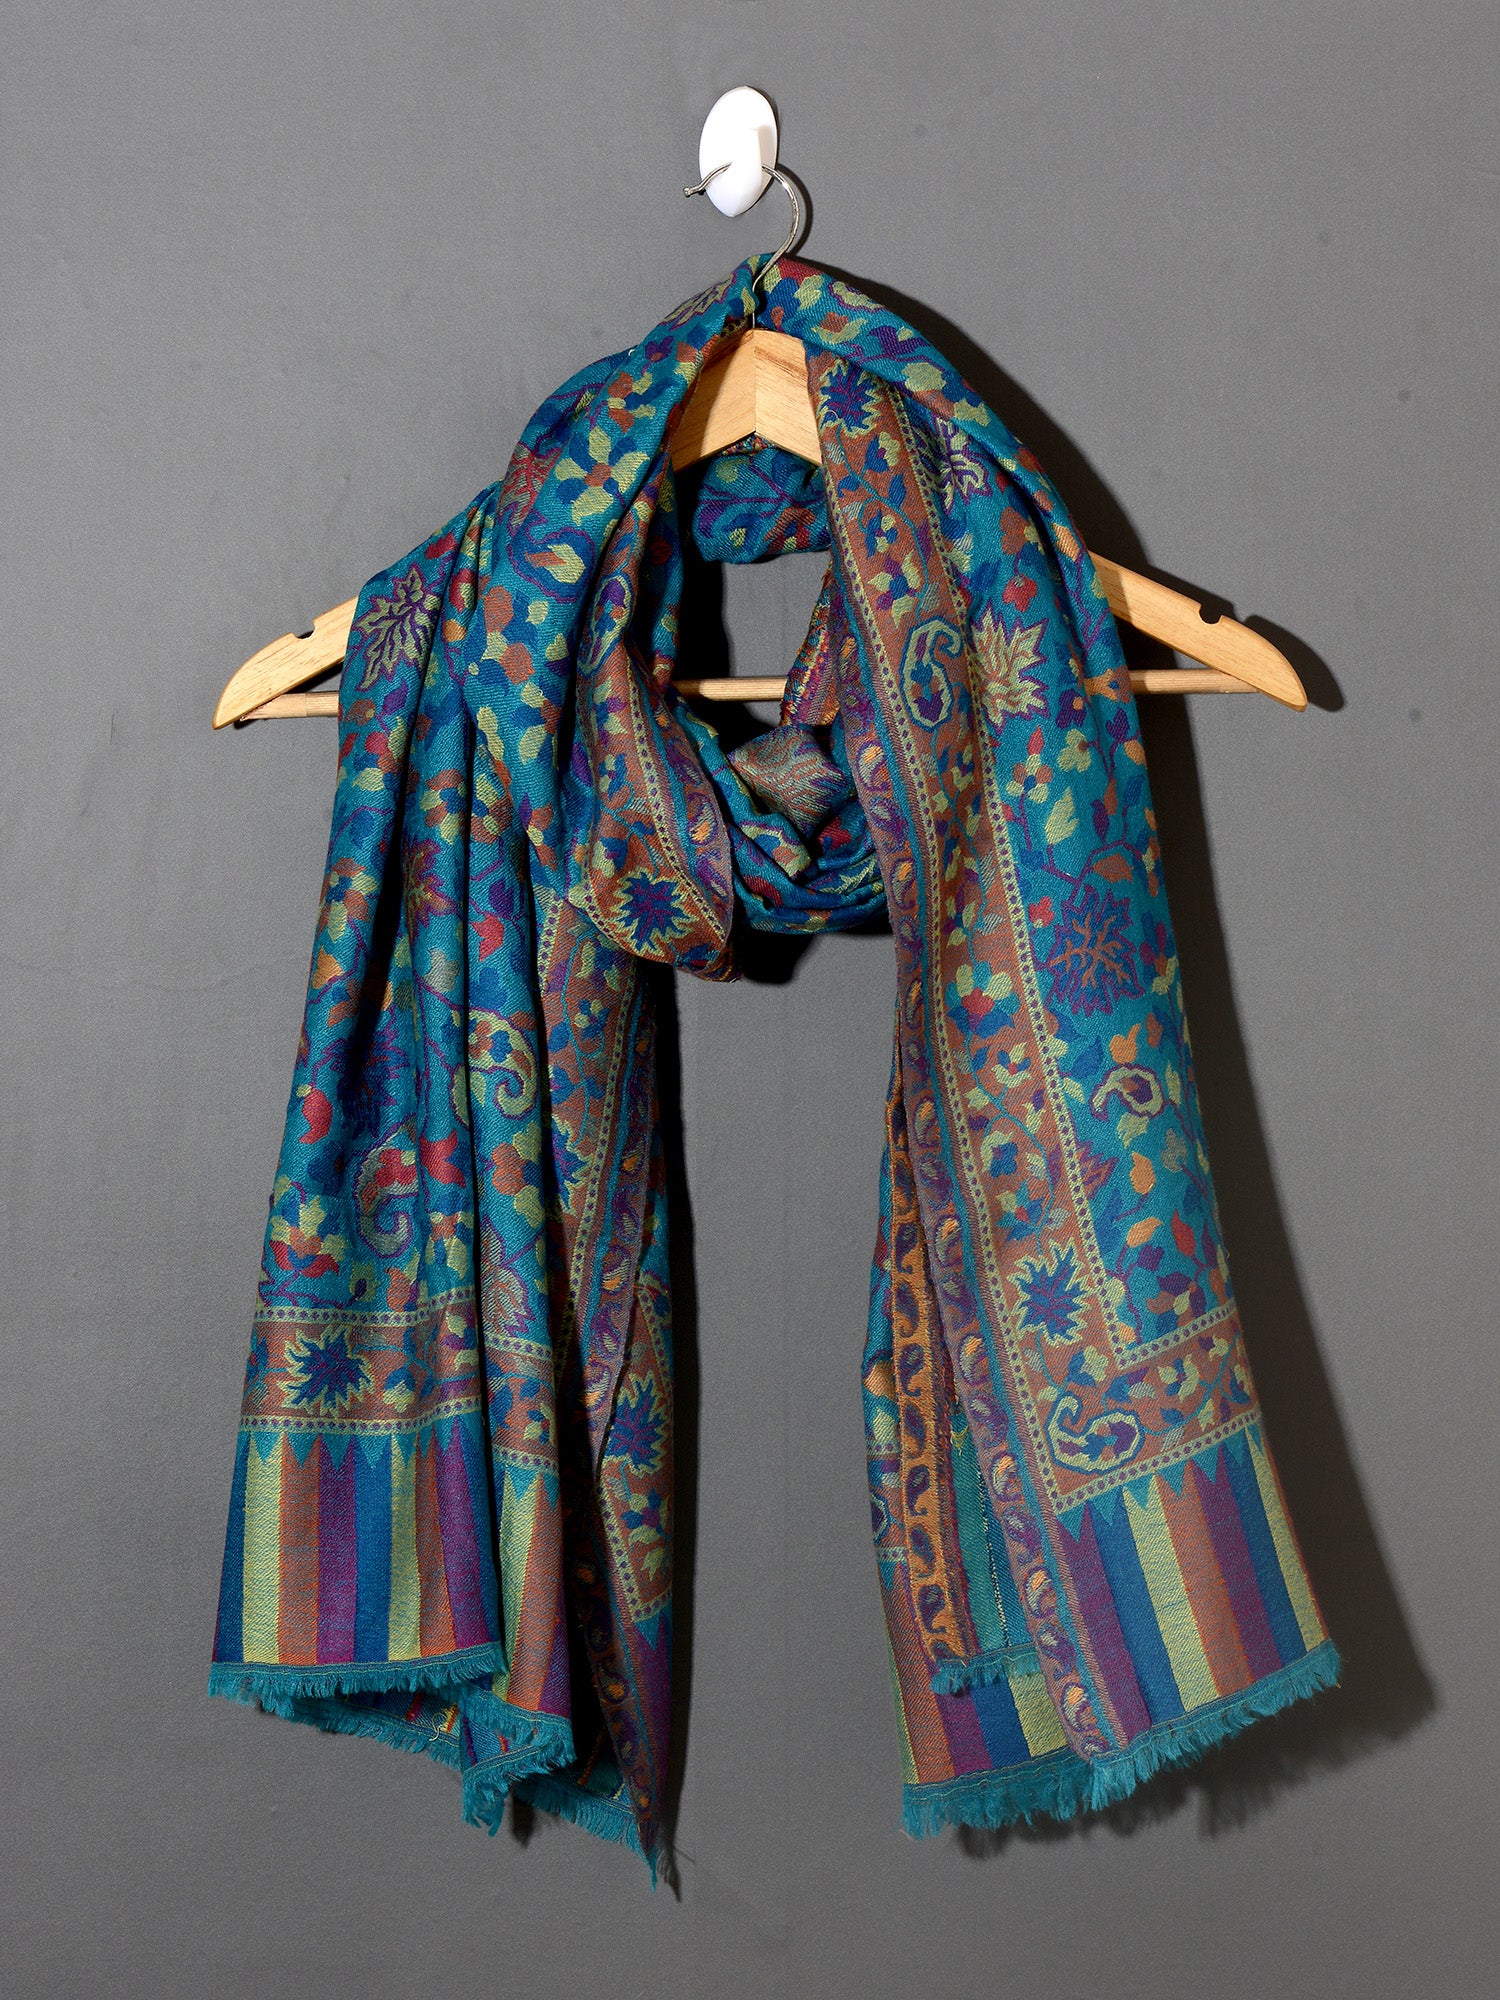 SUBASH Alluring Blue color Kani Woven Shawl - Unisex